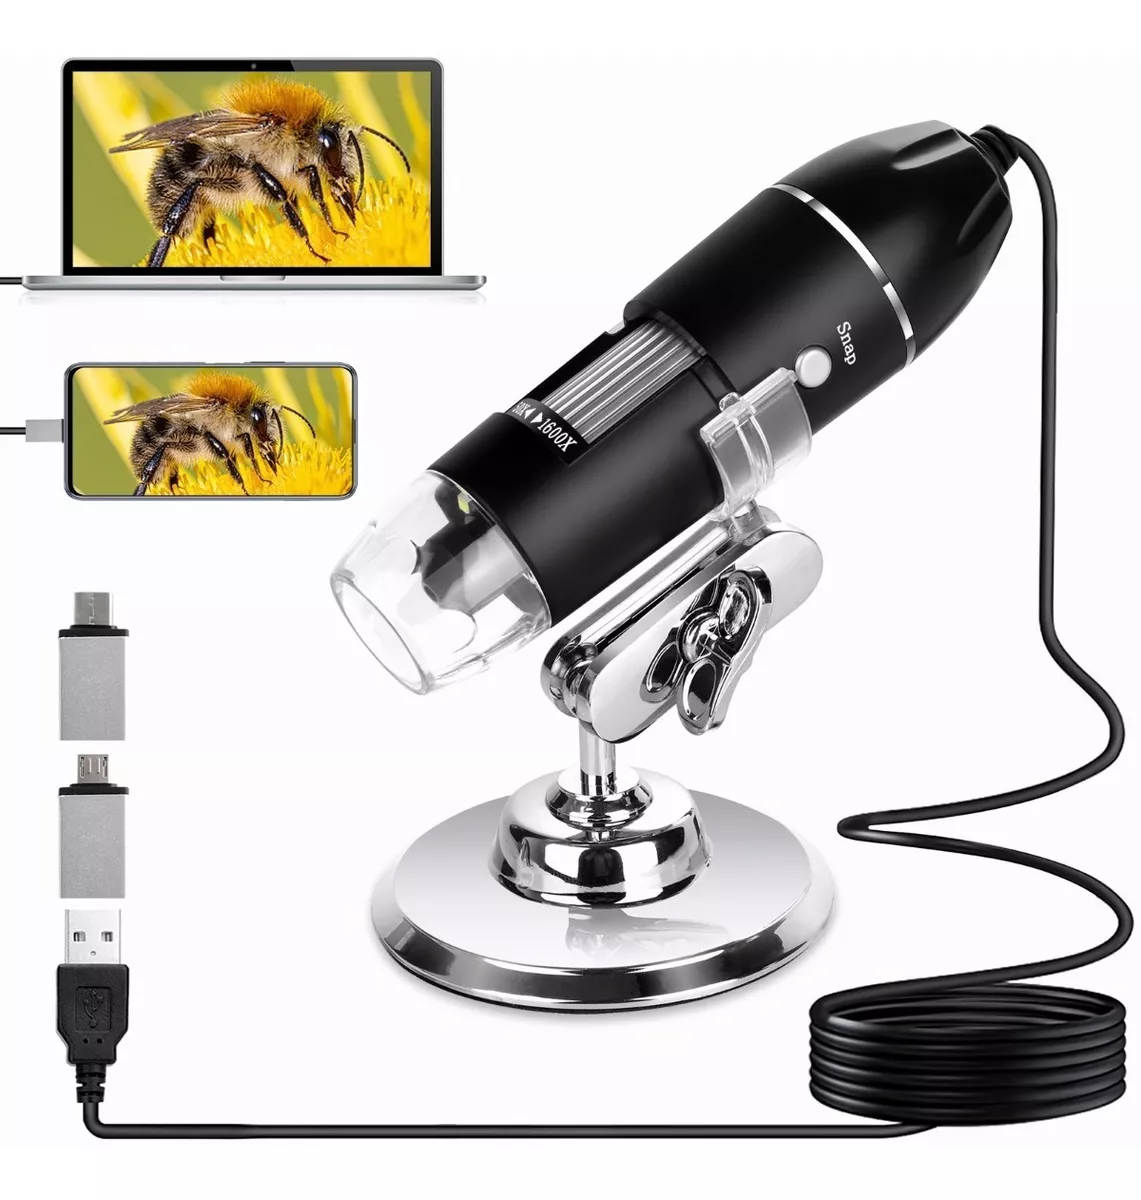 01 02 015 Microscopio Digital USB, Cámara de Microscopio USB HD de